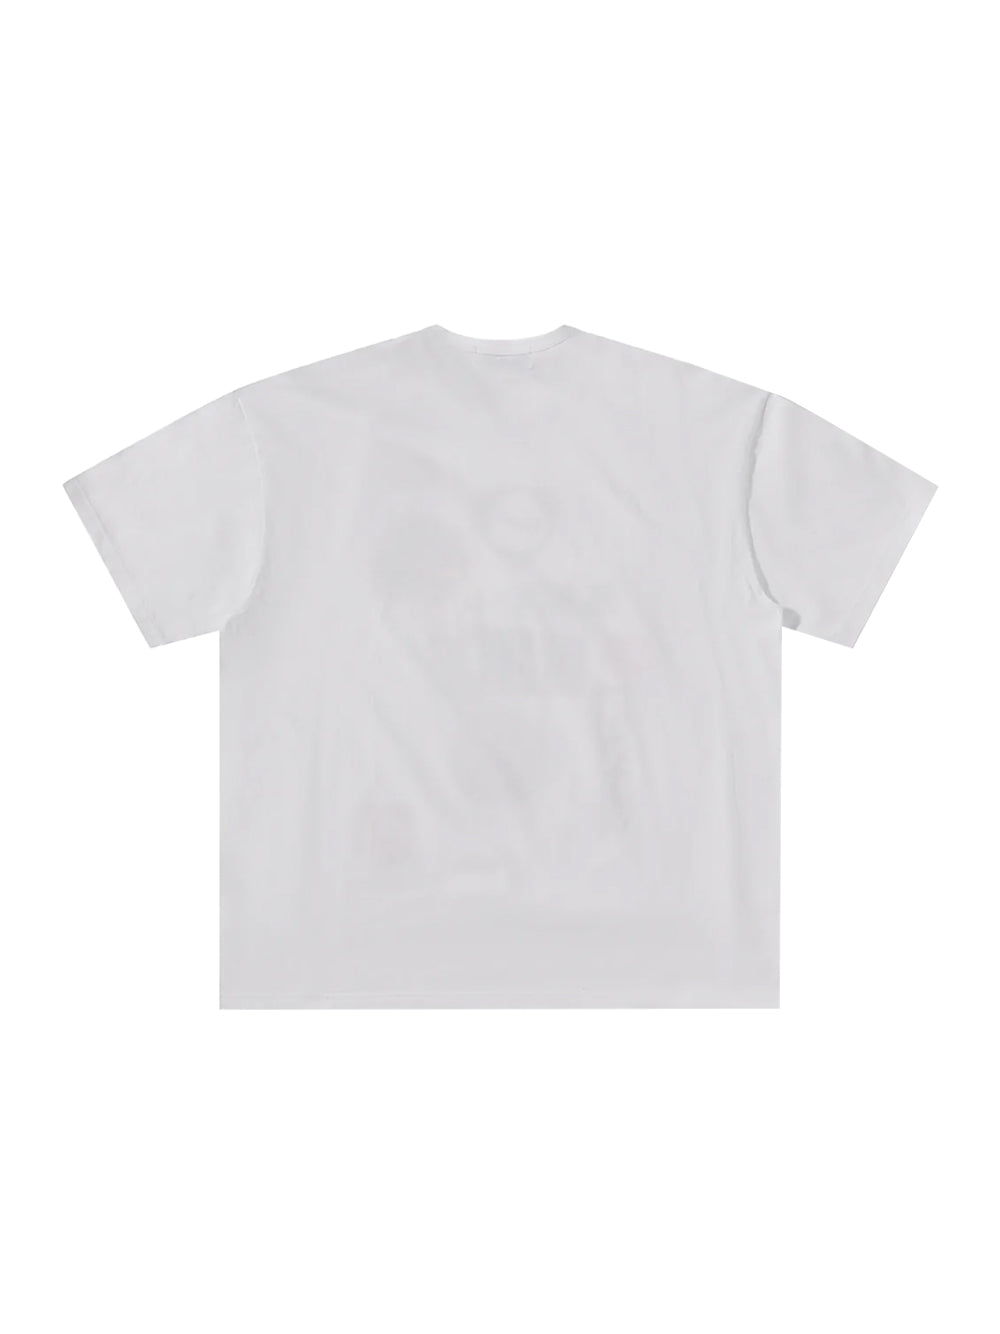 Nike Print Oversized T-Shirt (White)